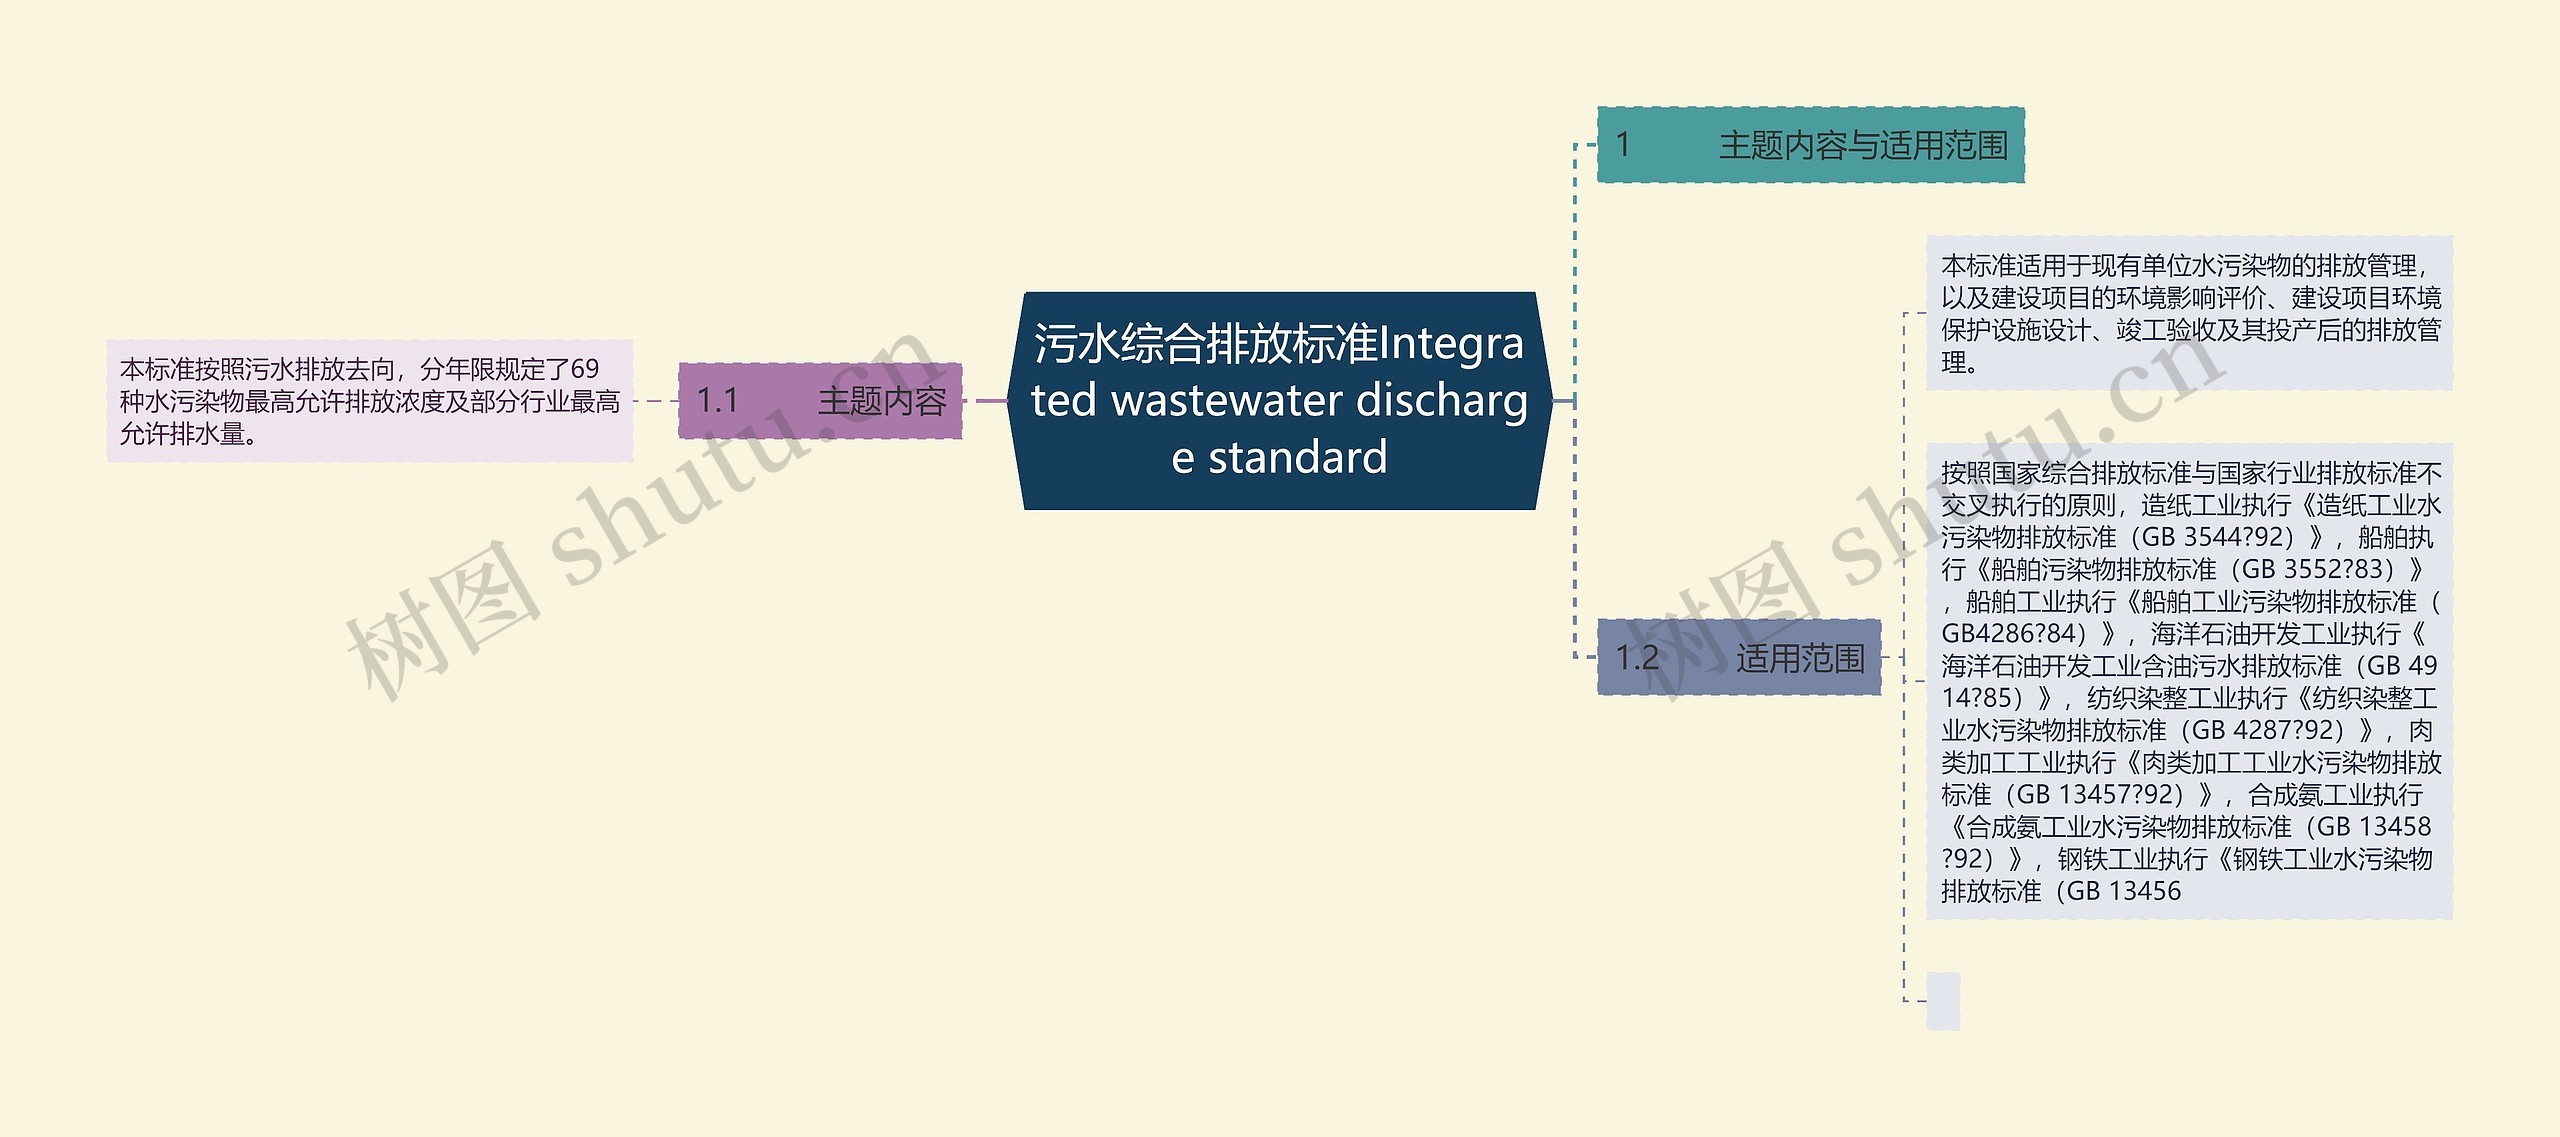 污水综合排放标准Integrated wastewater discharge standard